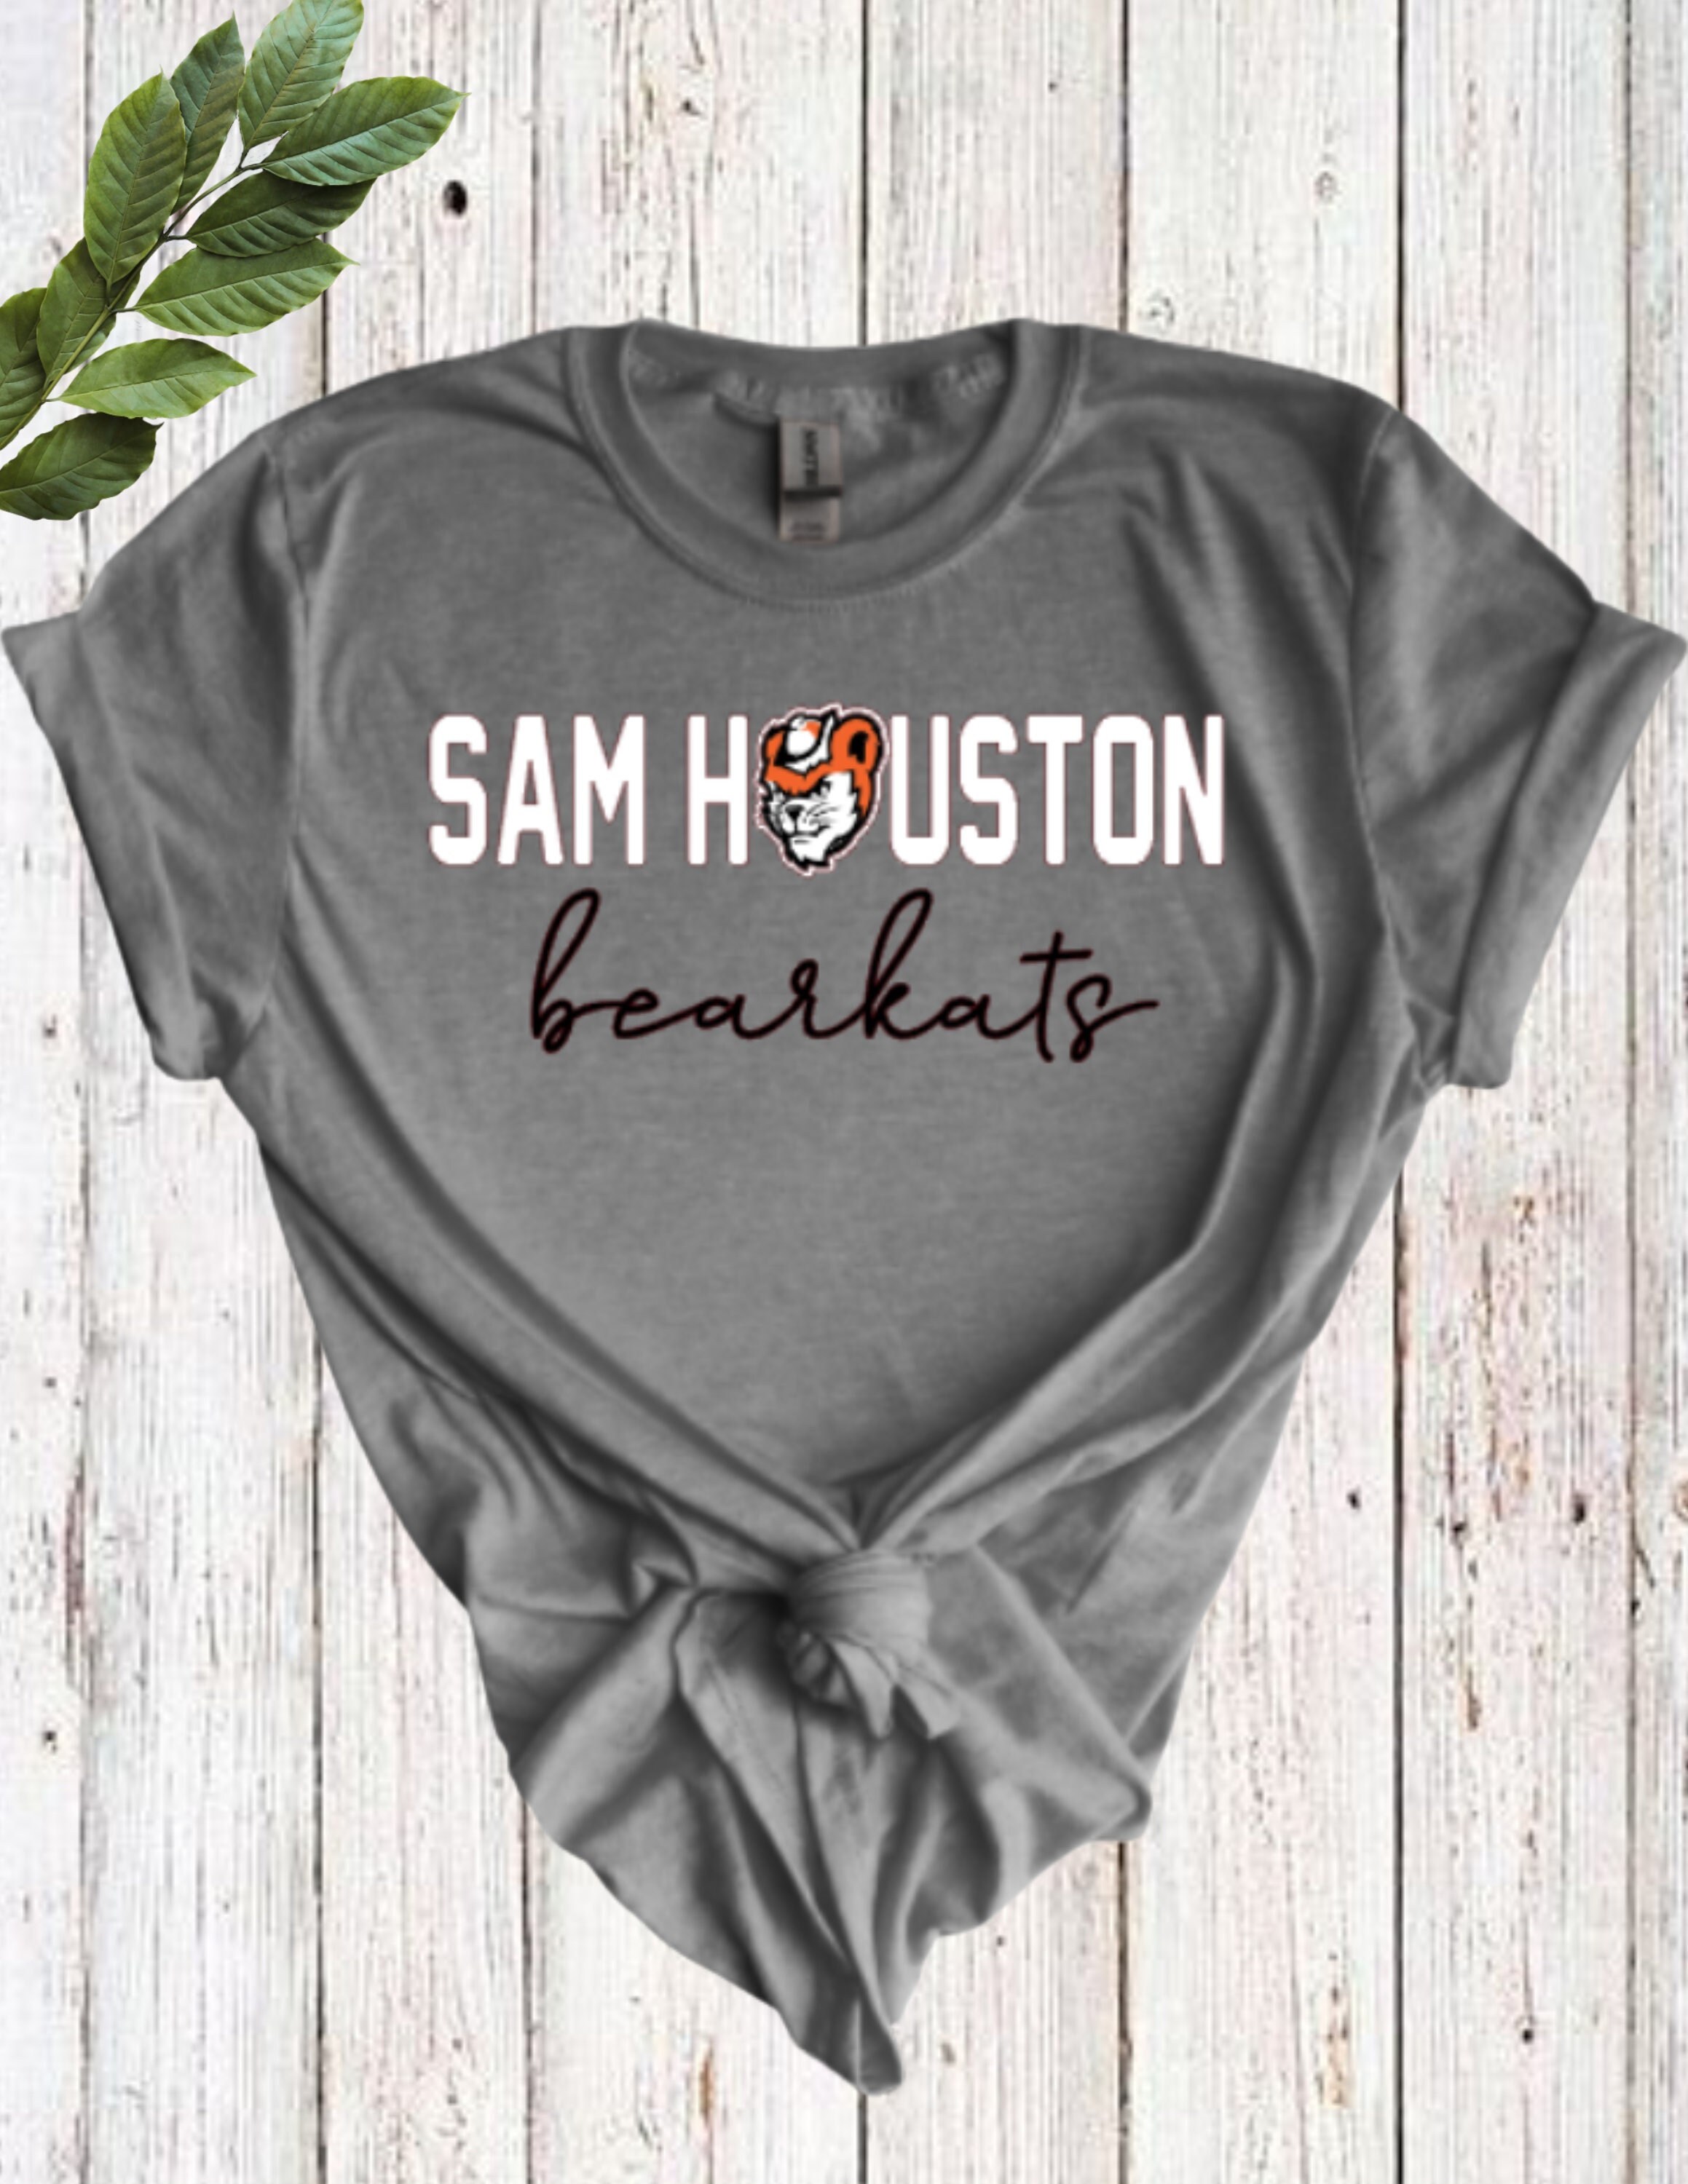 Discover Sam Houston State University Shirt - Bearkats - SHSU - Sam Houston Shirt - SHSU Bearkats Shirt